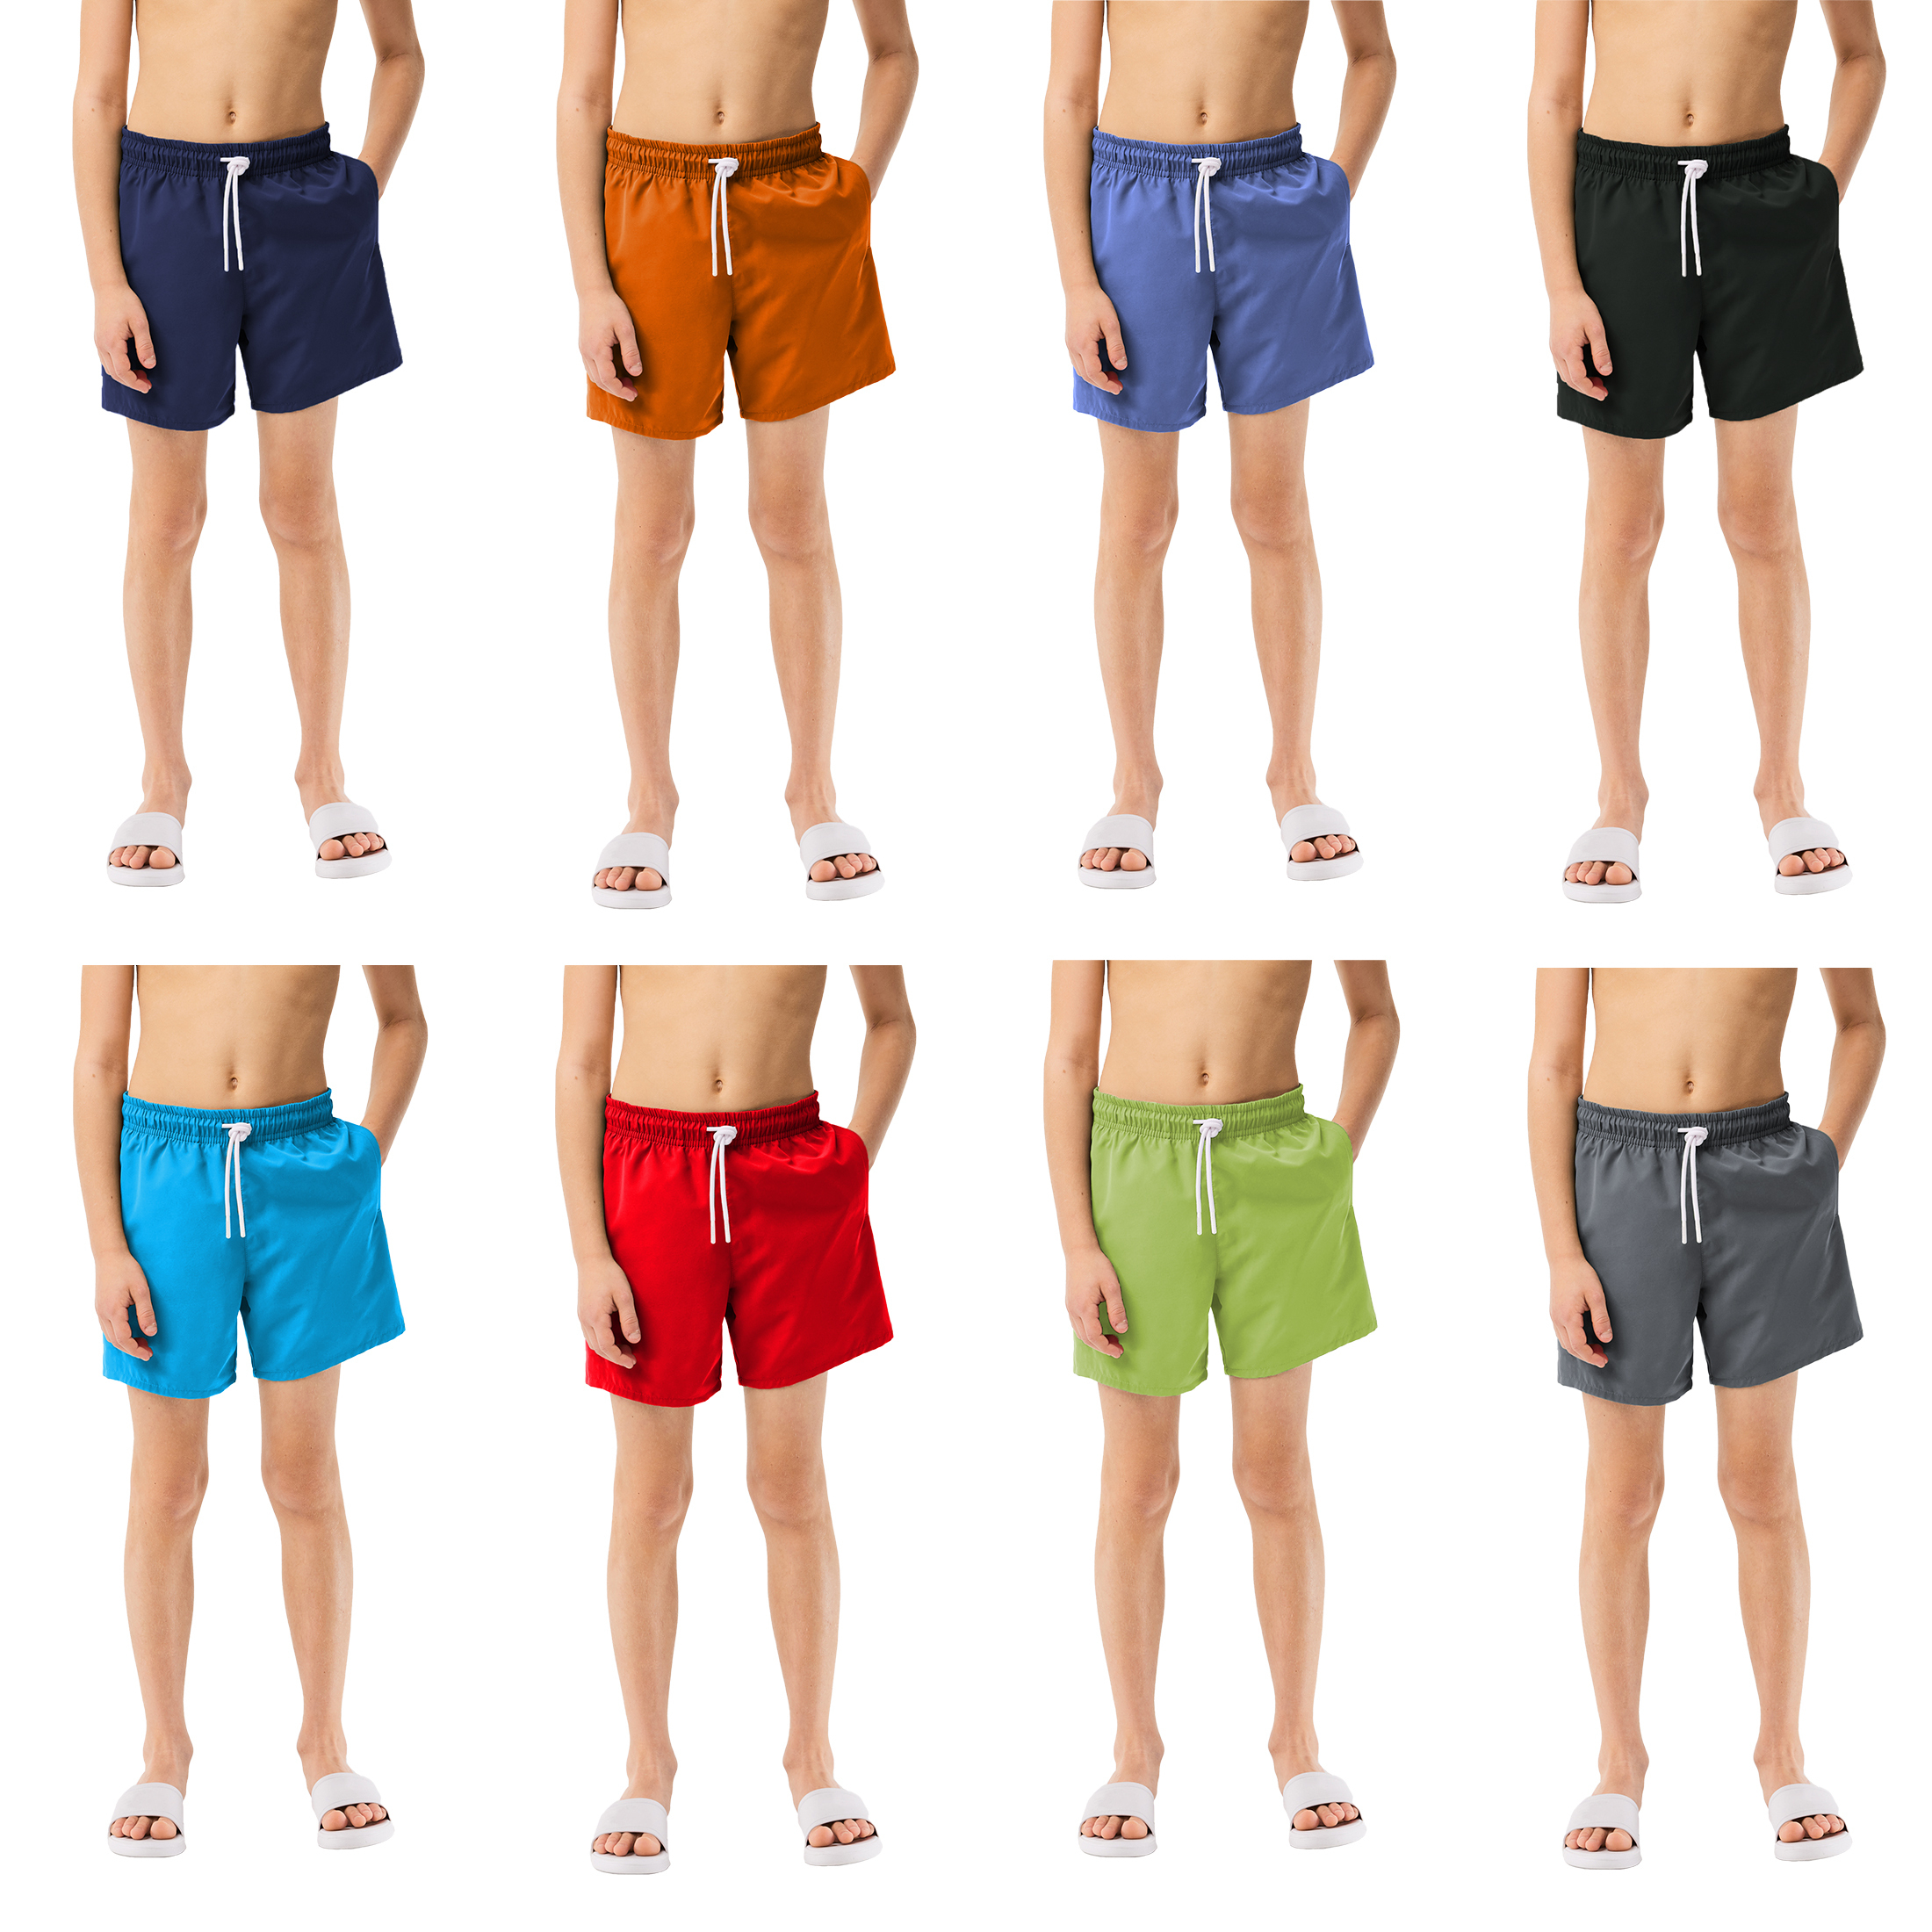 3-Pack Boy's Beach Swim Trunk Shorts Quick Dry UPF 50+ Little Boys Bathing Summer Swimsuit - L